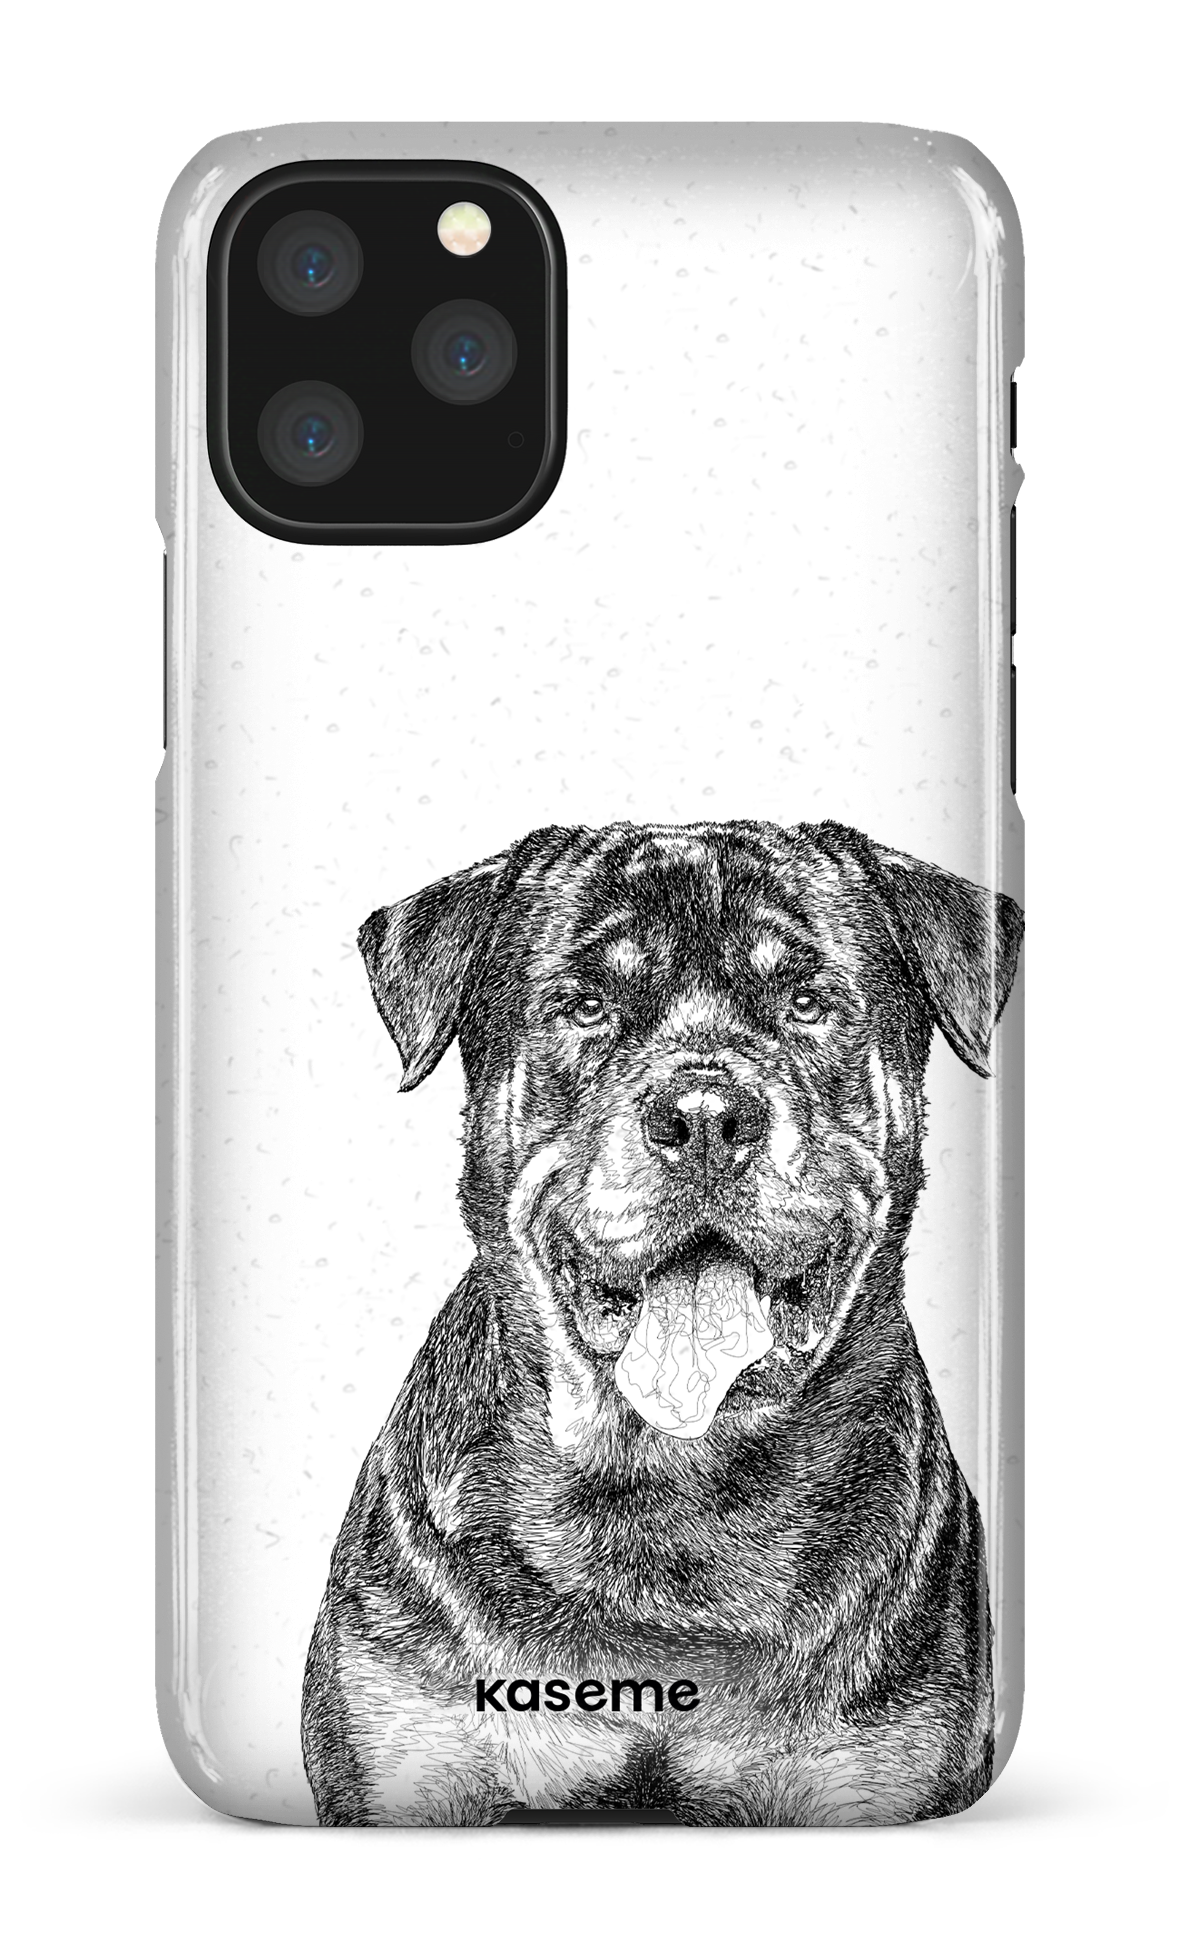 Rottweiler - iPhone 11 Pro